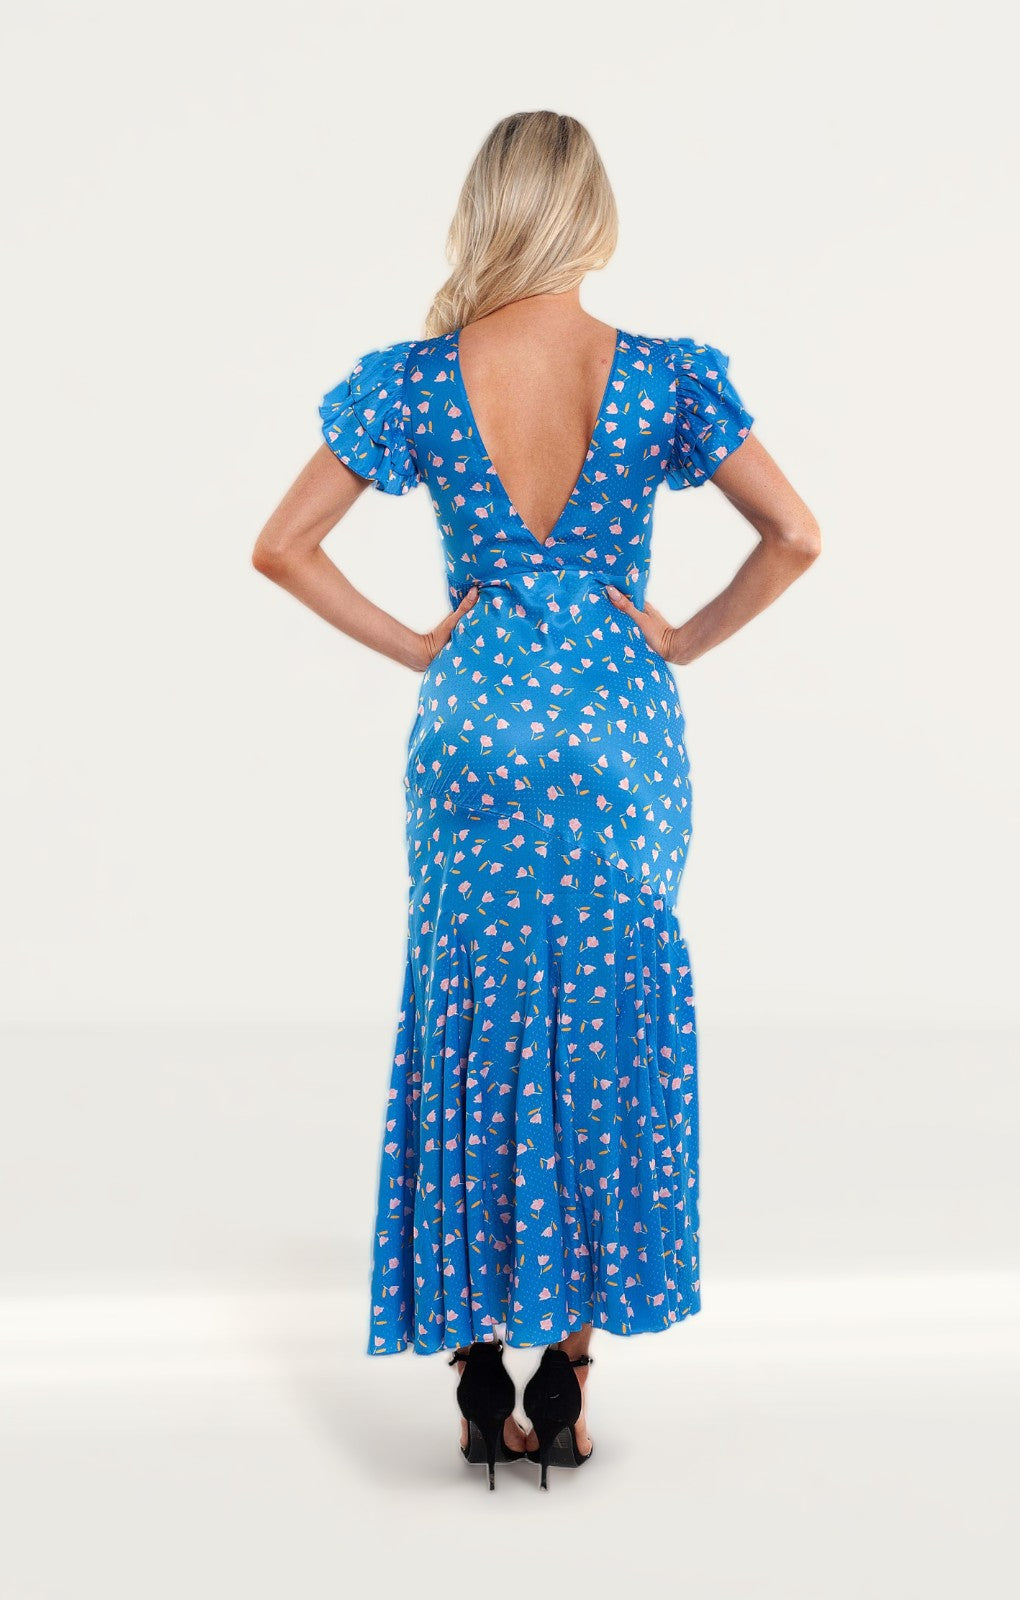 Saylor Jen Maxi Dress product image